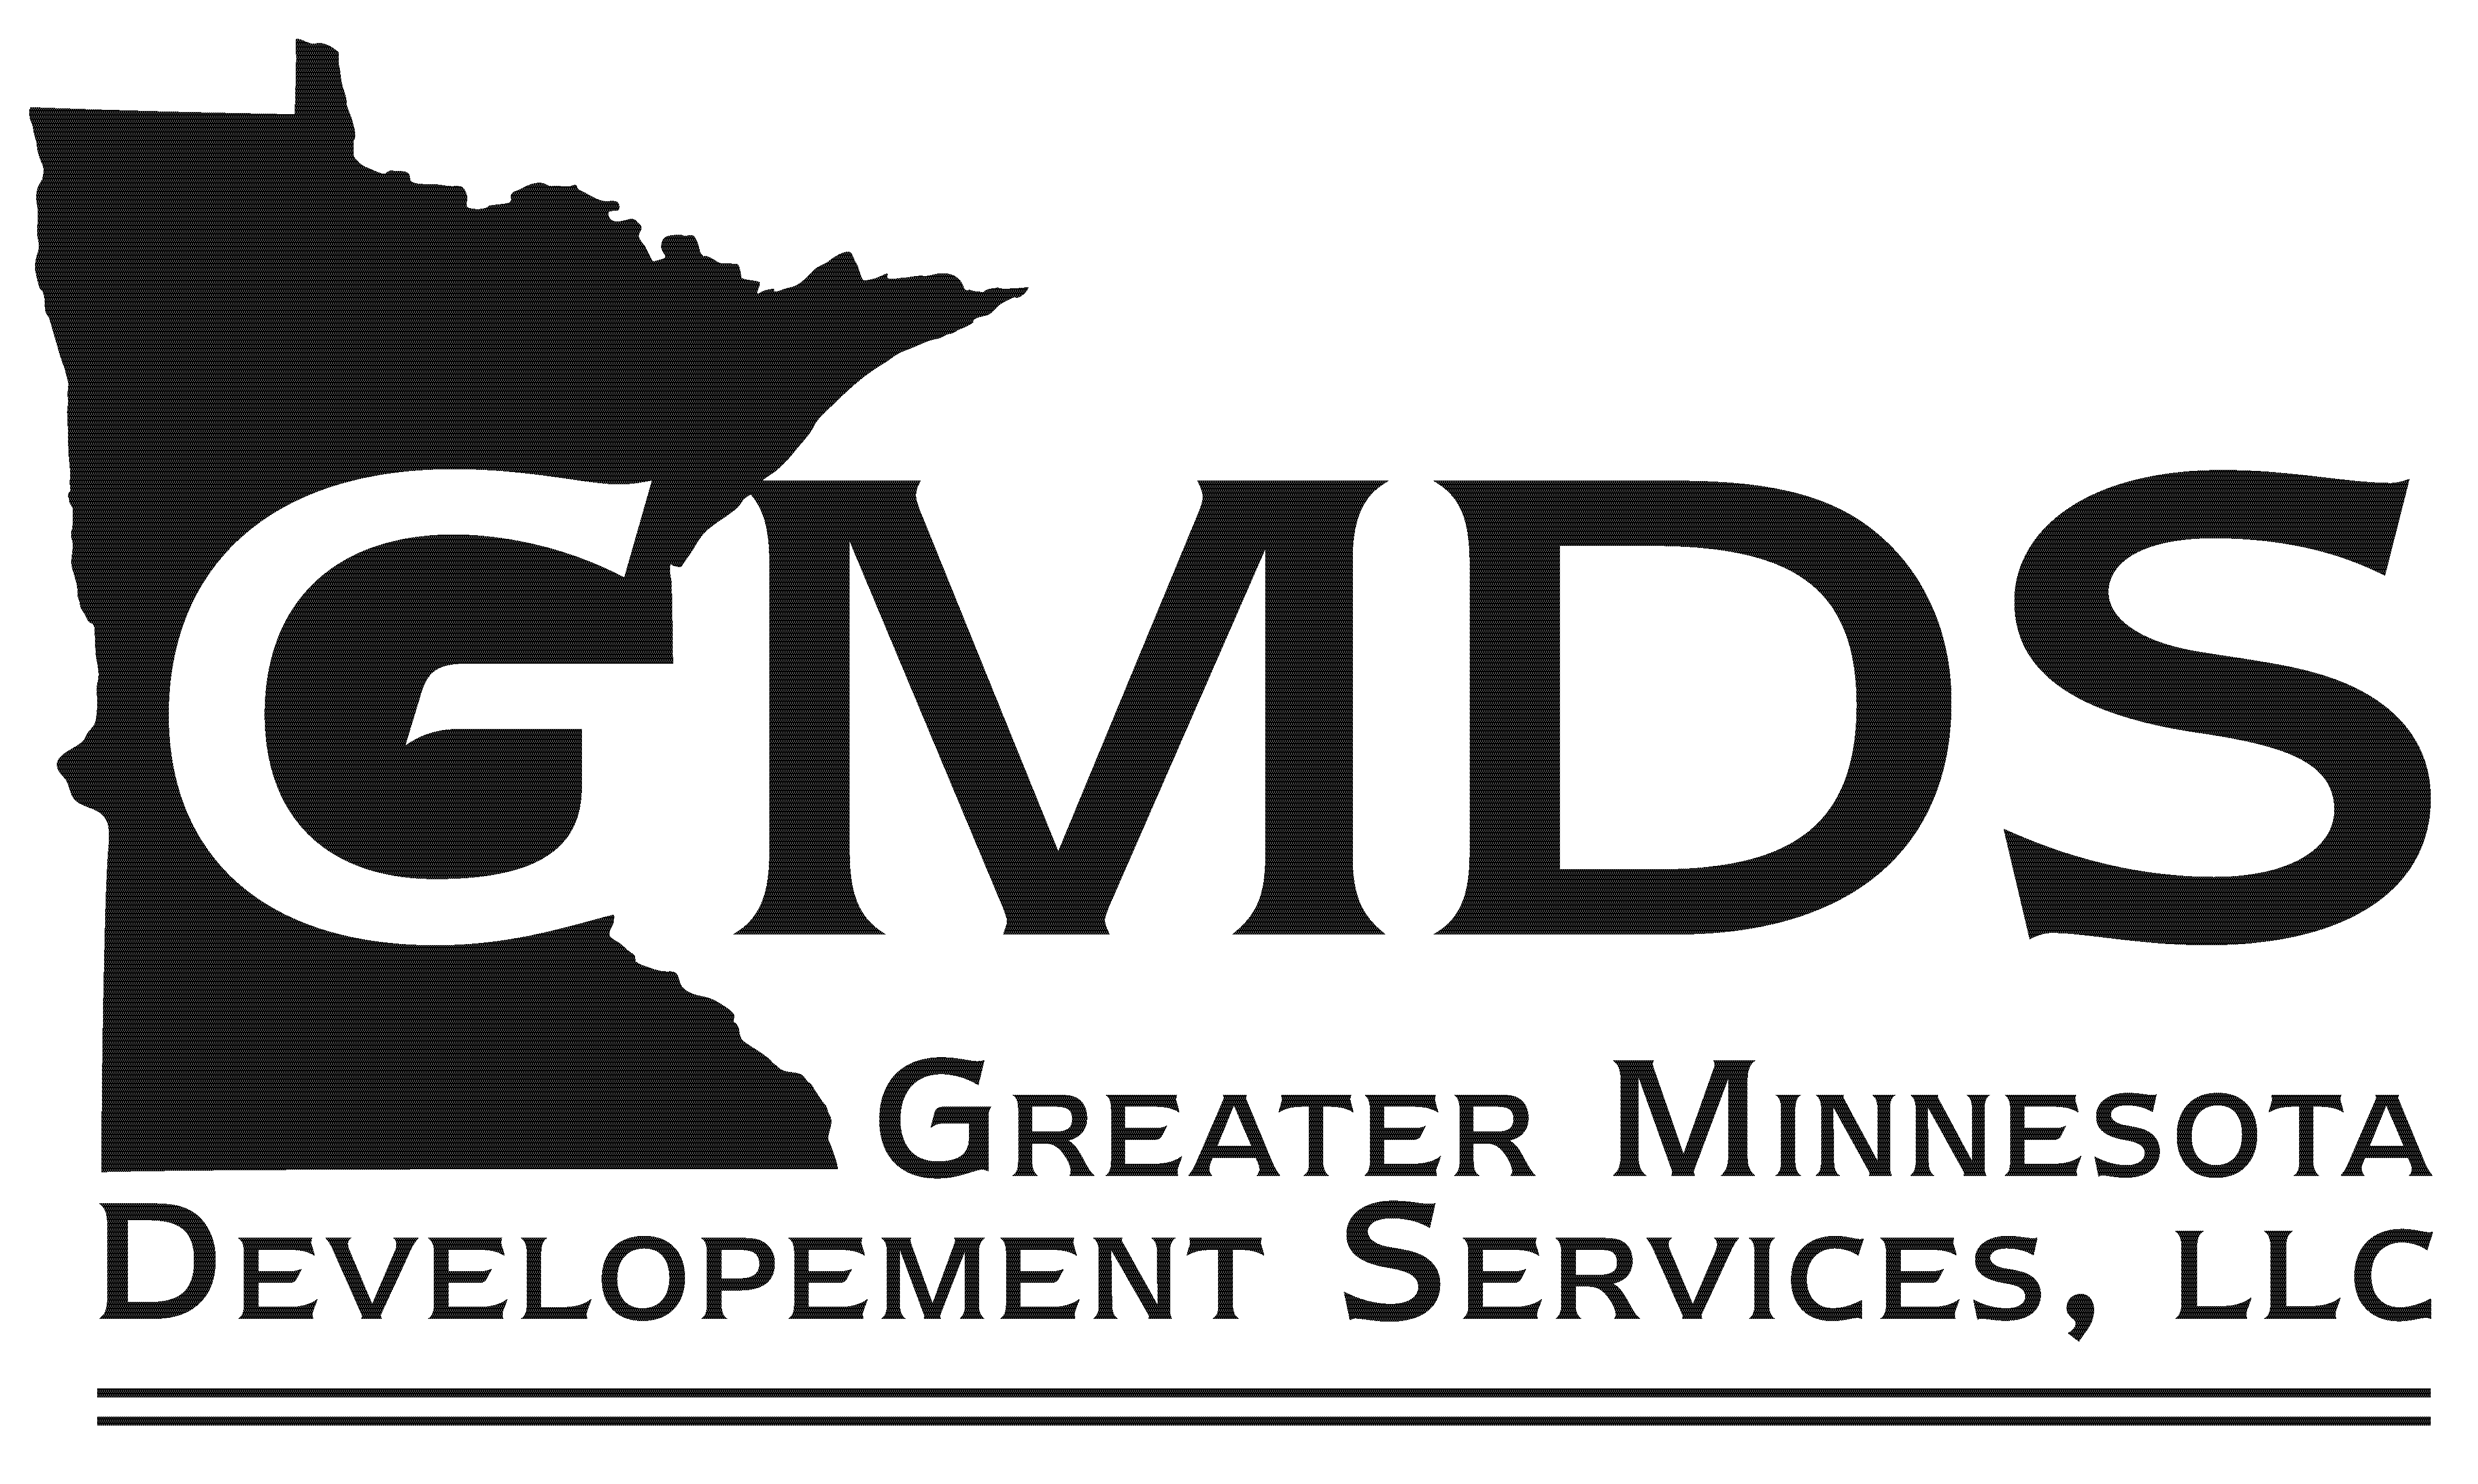 Greater Minnesota Development Services, LLC.